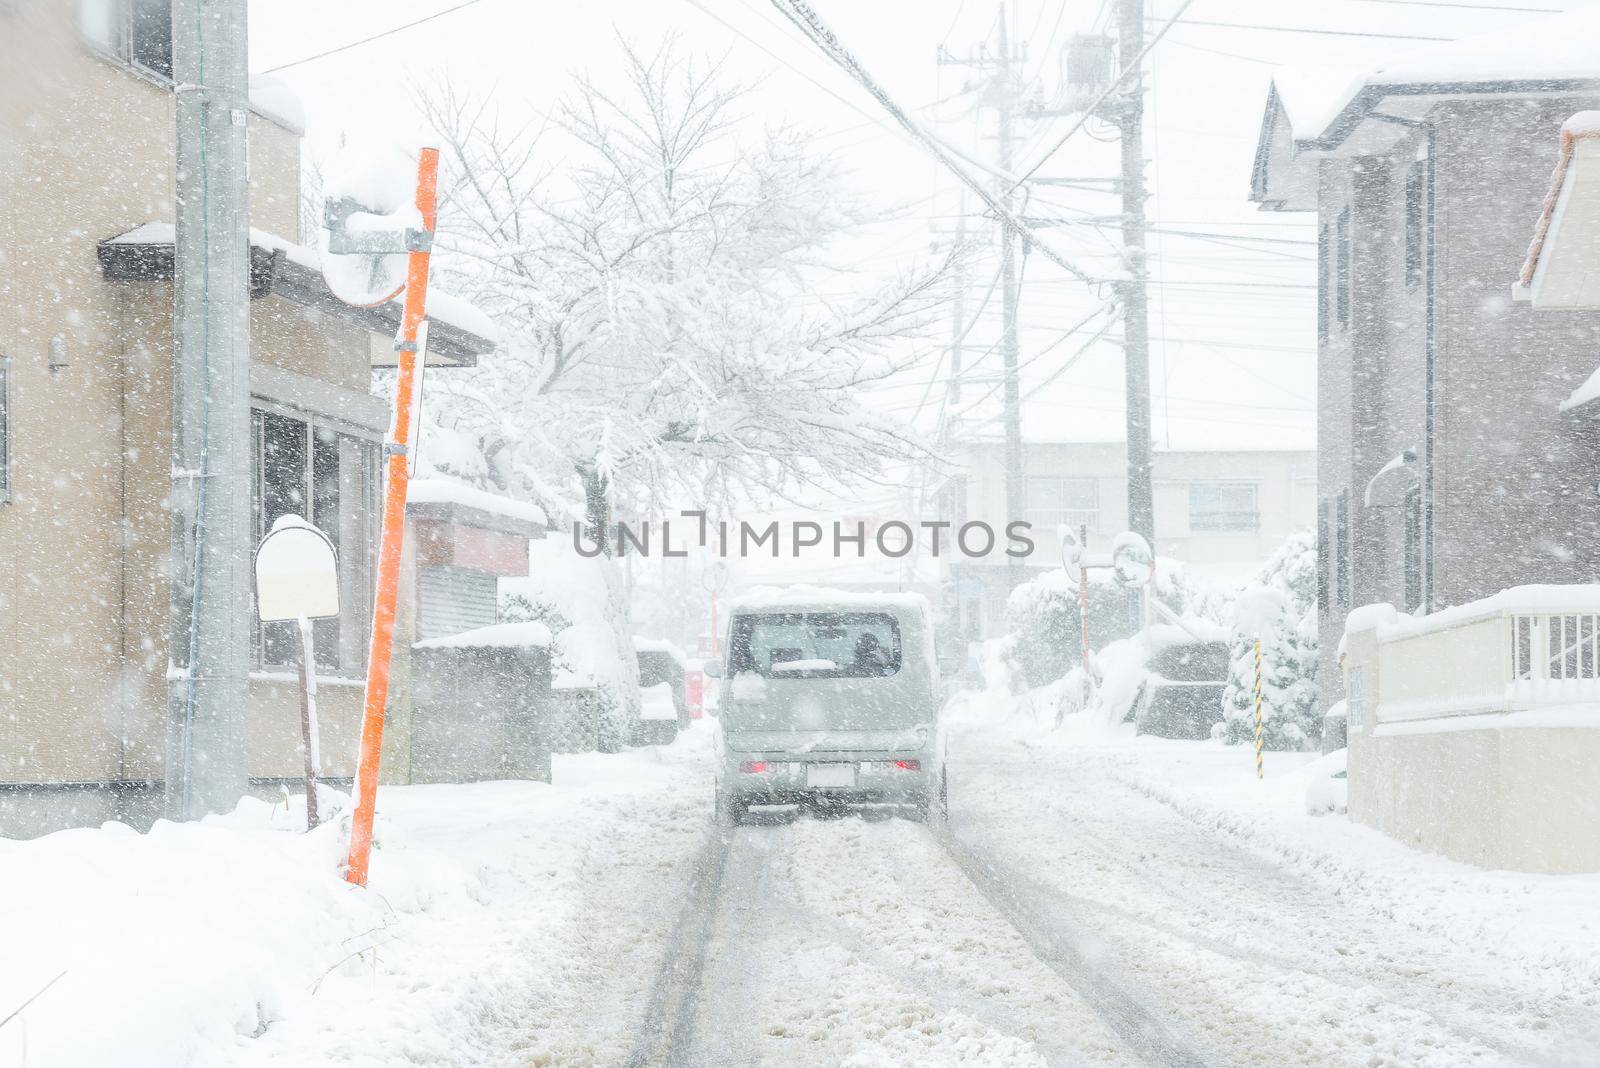 Fresh white snow falling in winter season at Kawaguchiko,Japan by Nuamfolio